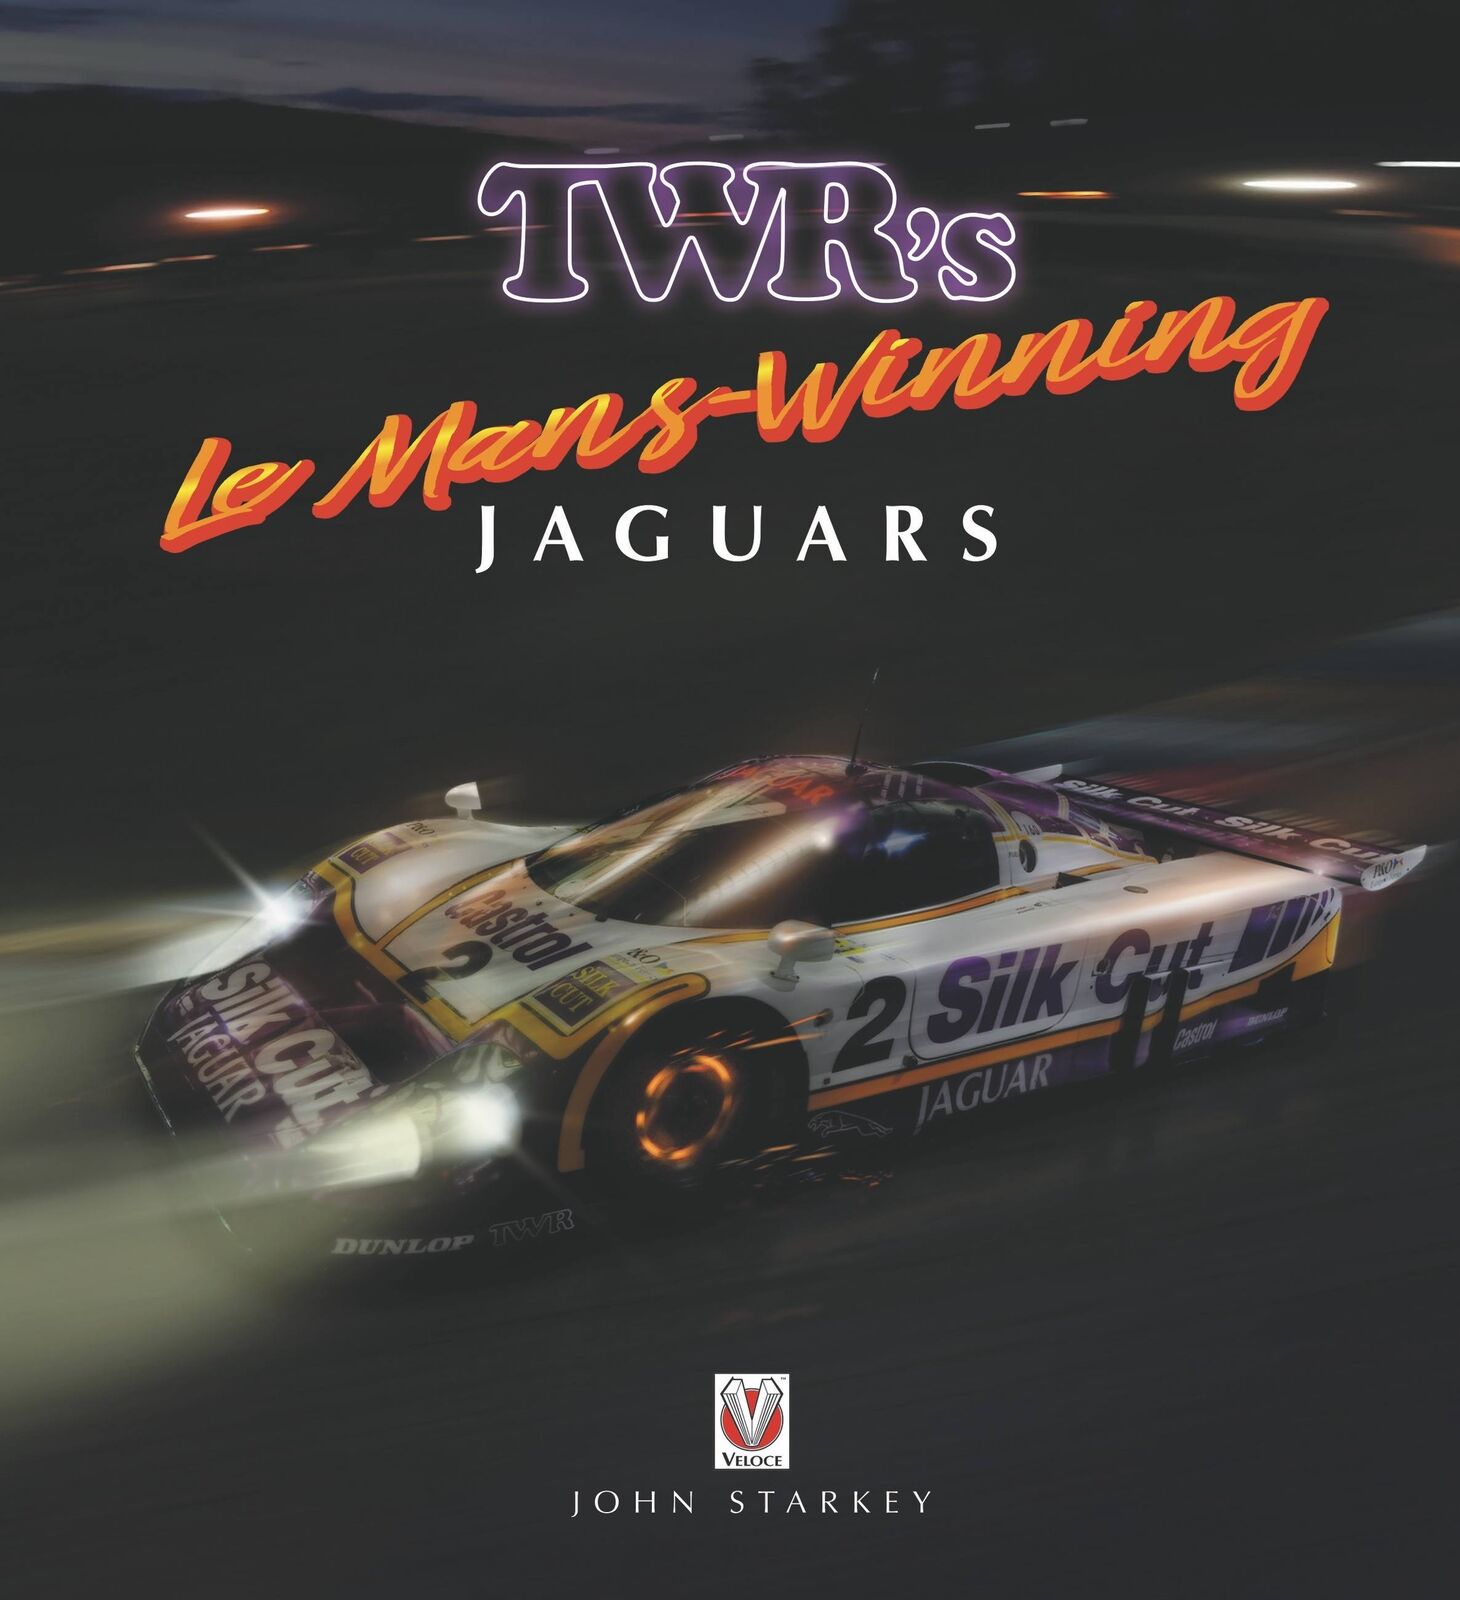 TWR\'s Le Mans winning Jaguars book